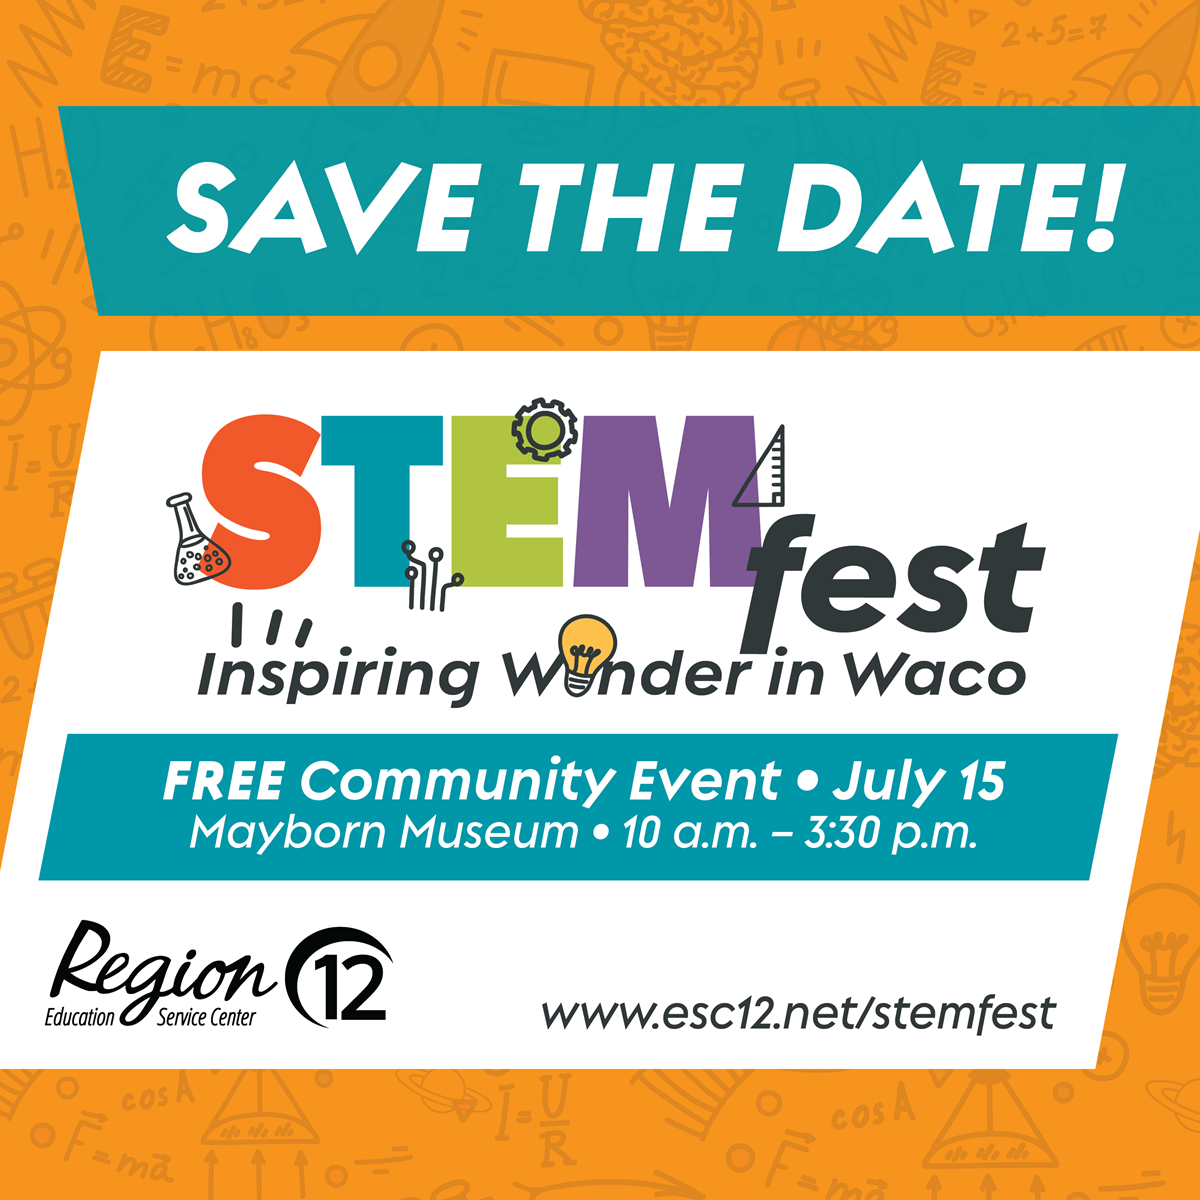 Save the Date
STEMfest Inspiring Wonder in Waco
FREE Community Event • July 15
Mayborn Museum • 10 am - 3:30 pm
ESC Region 12
www.esc12.net/stemfest